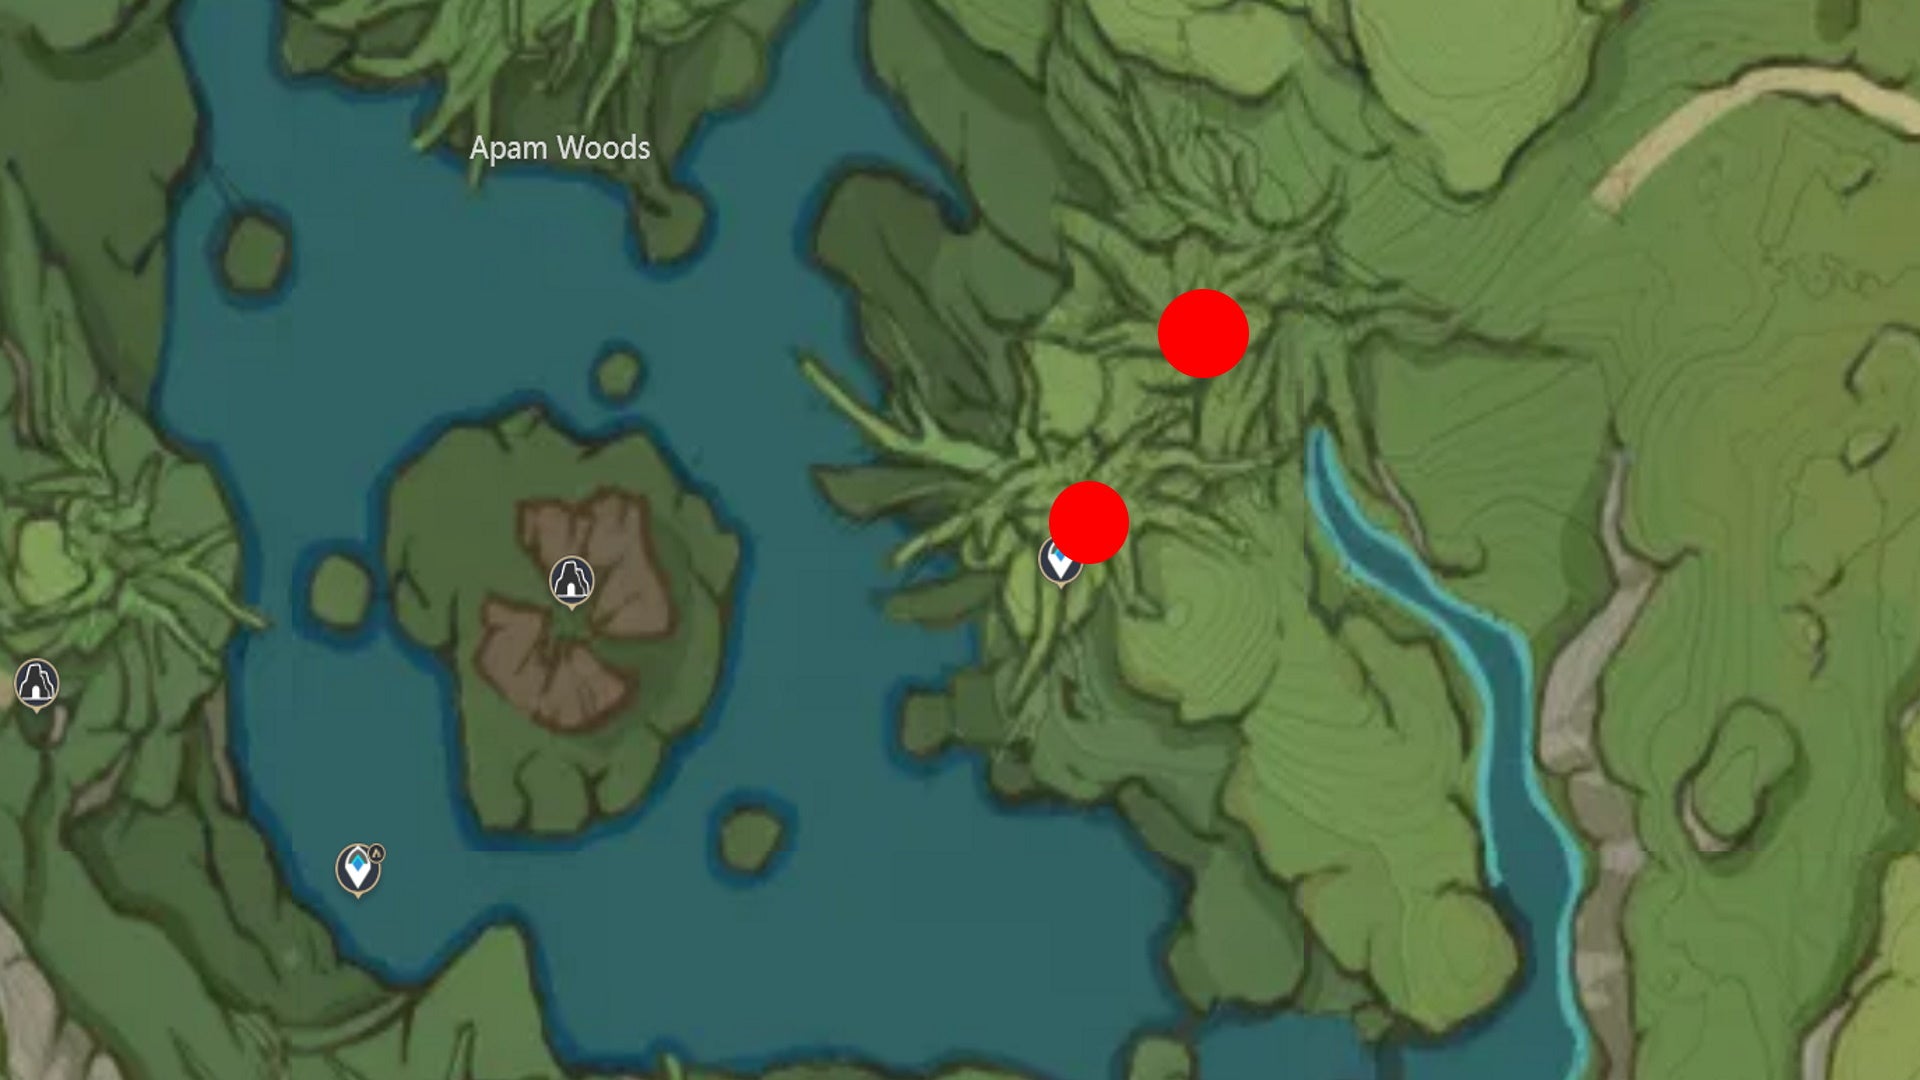 Rukkhashava Mushroom Locations: A map showing Rukkhashava locations in Eastern Apam Forest